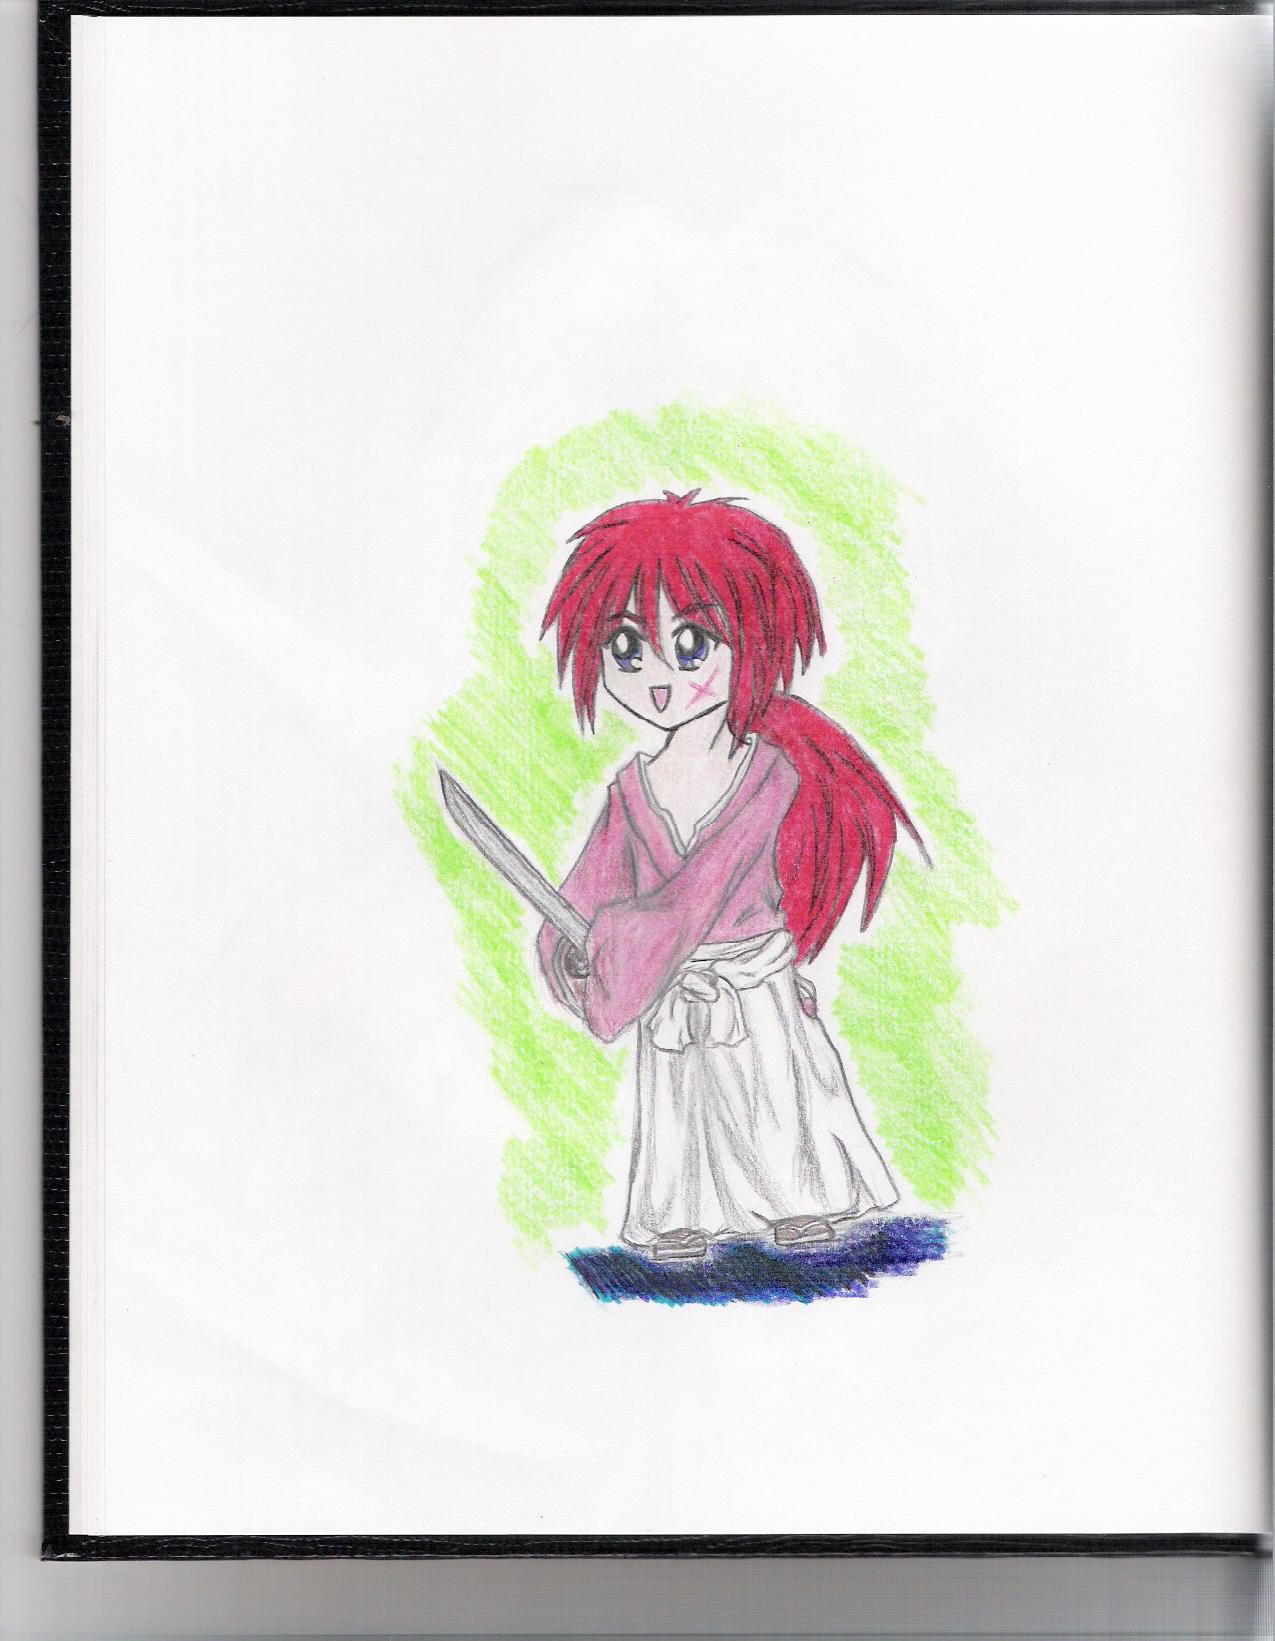 Chibi Kenshin(for YukinaObbsessionist) by anime_shall_brainwash_us_all